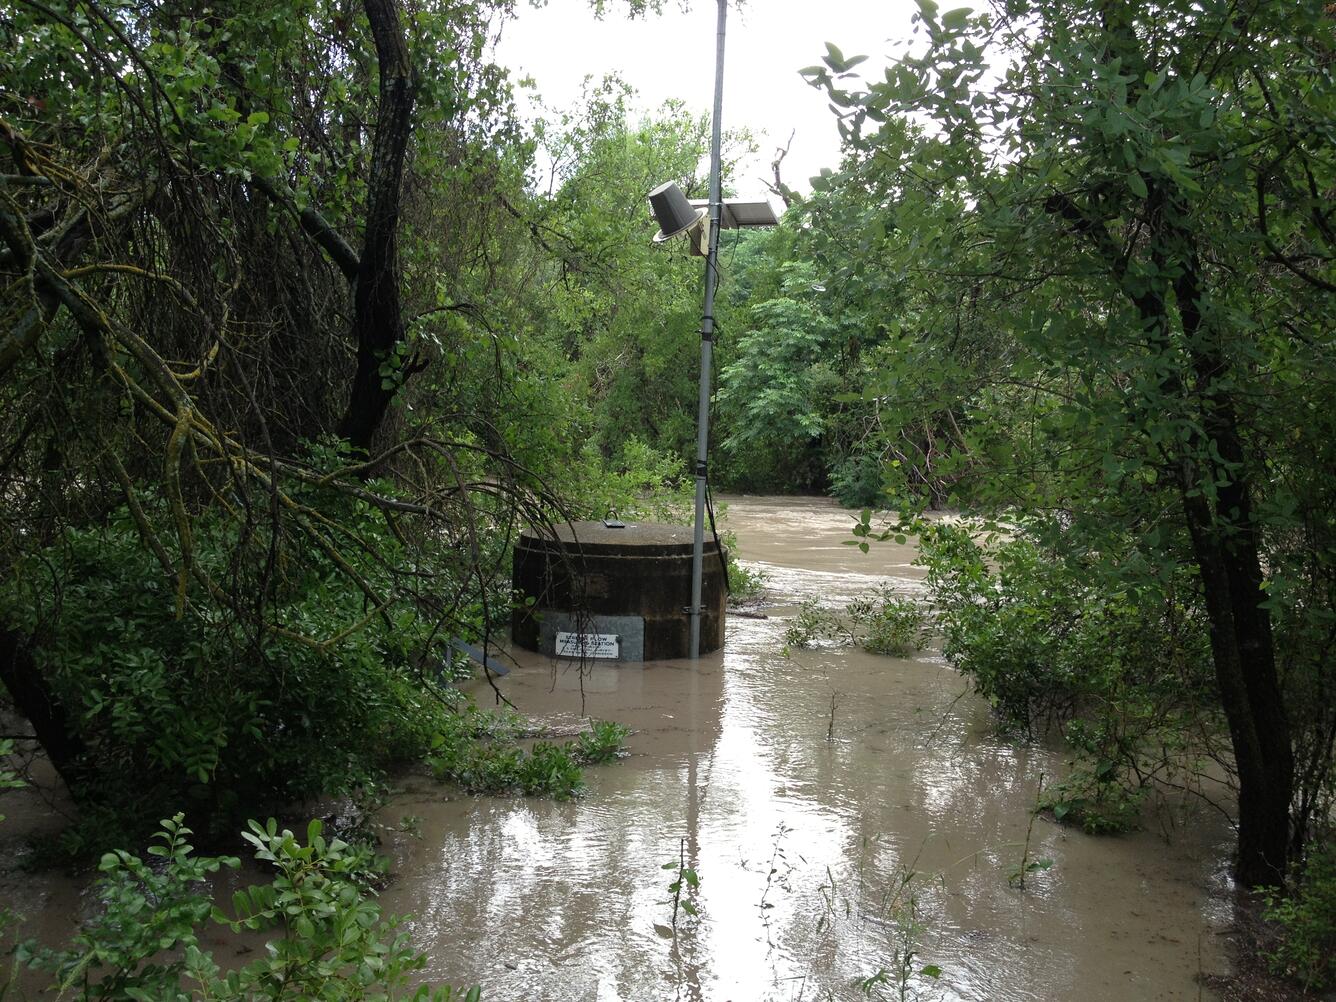 USGS streamflow gaging station 08204005 Leona River near Uvalde, Texas during flooding